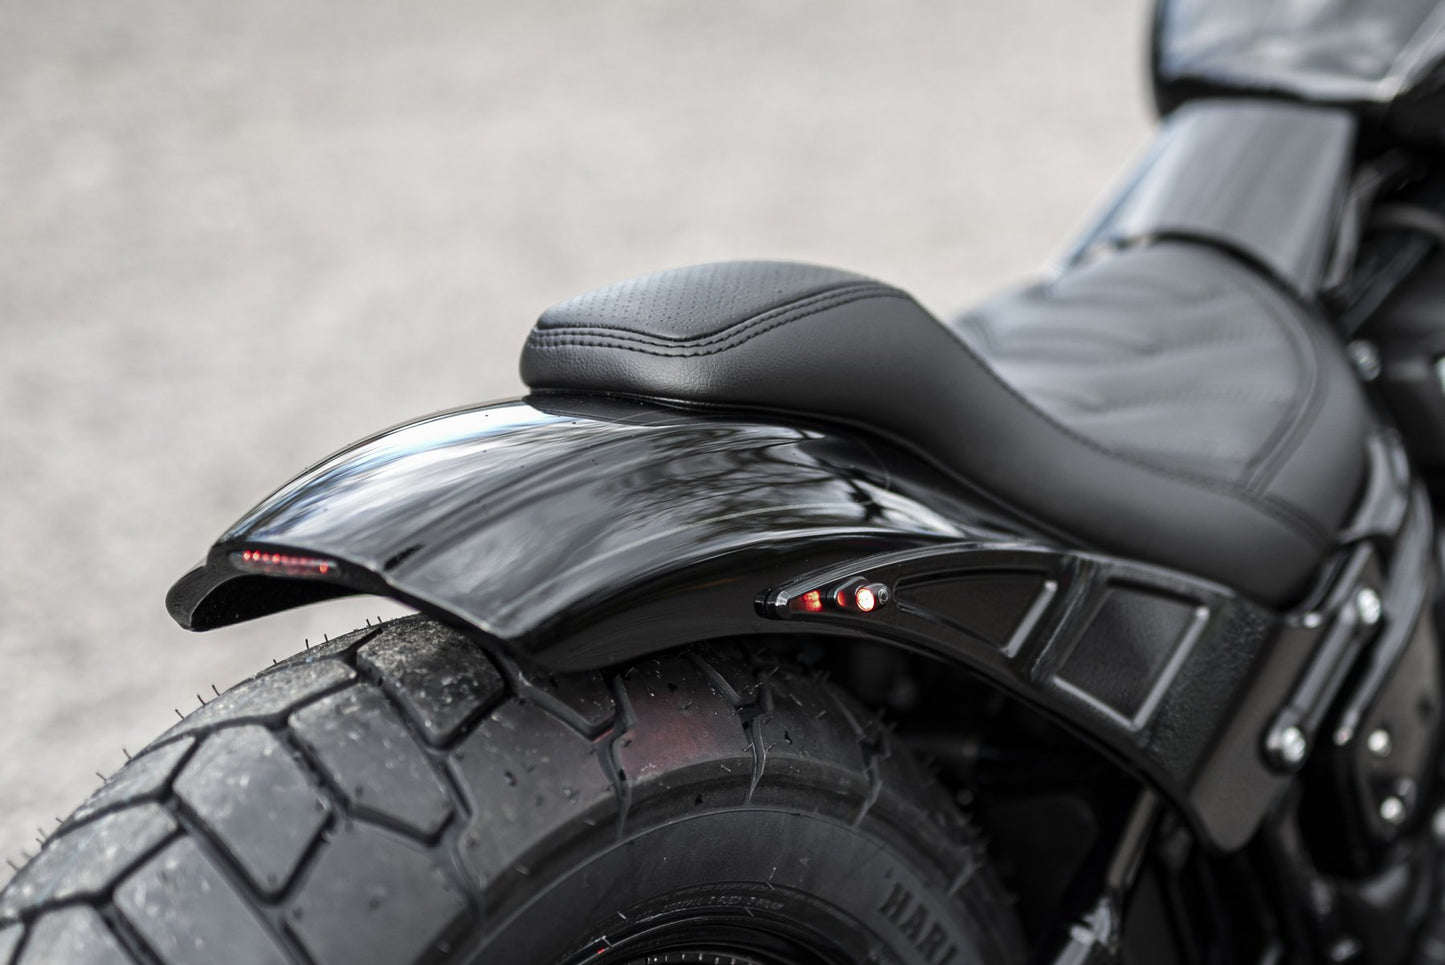 Zoomed Harley Davidson motorcycle with Killer Custom "Bobbstr" rear fender from the rear